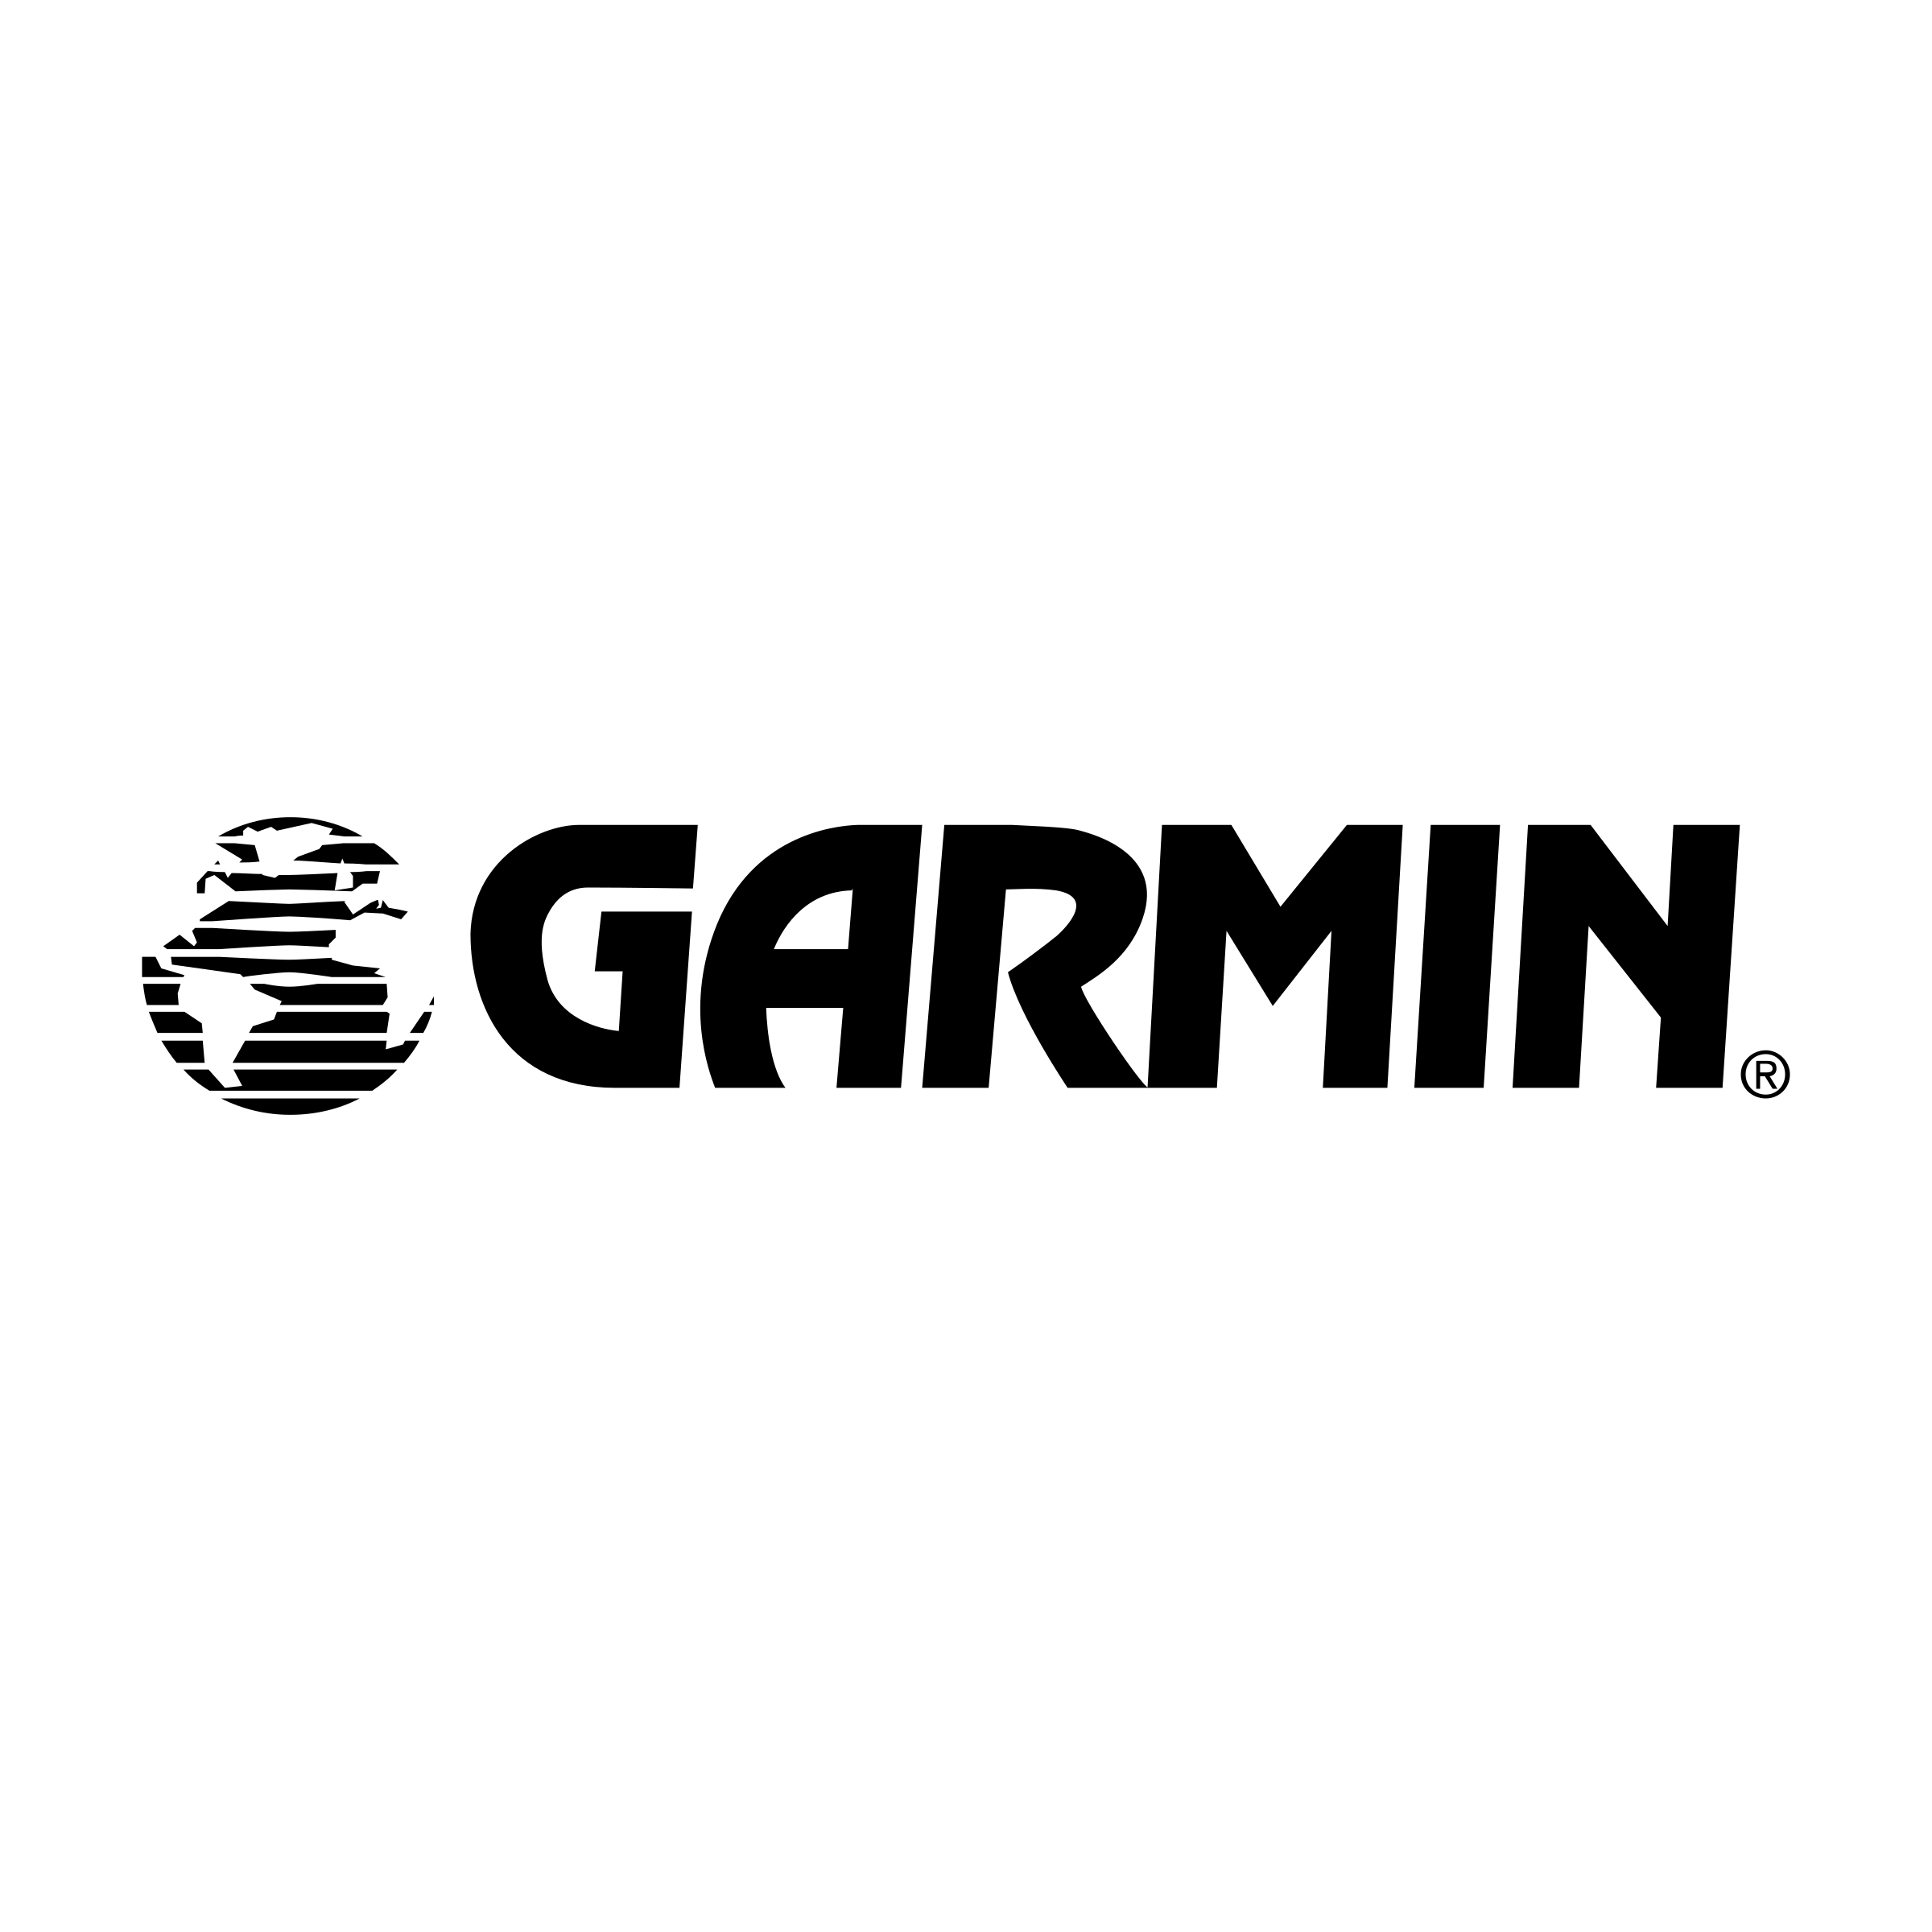 garmin-logo